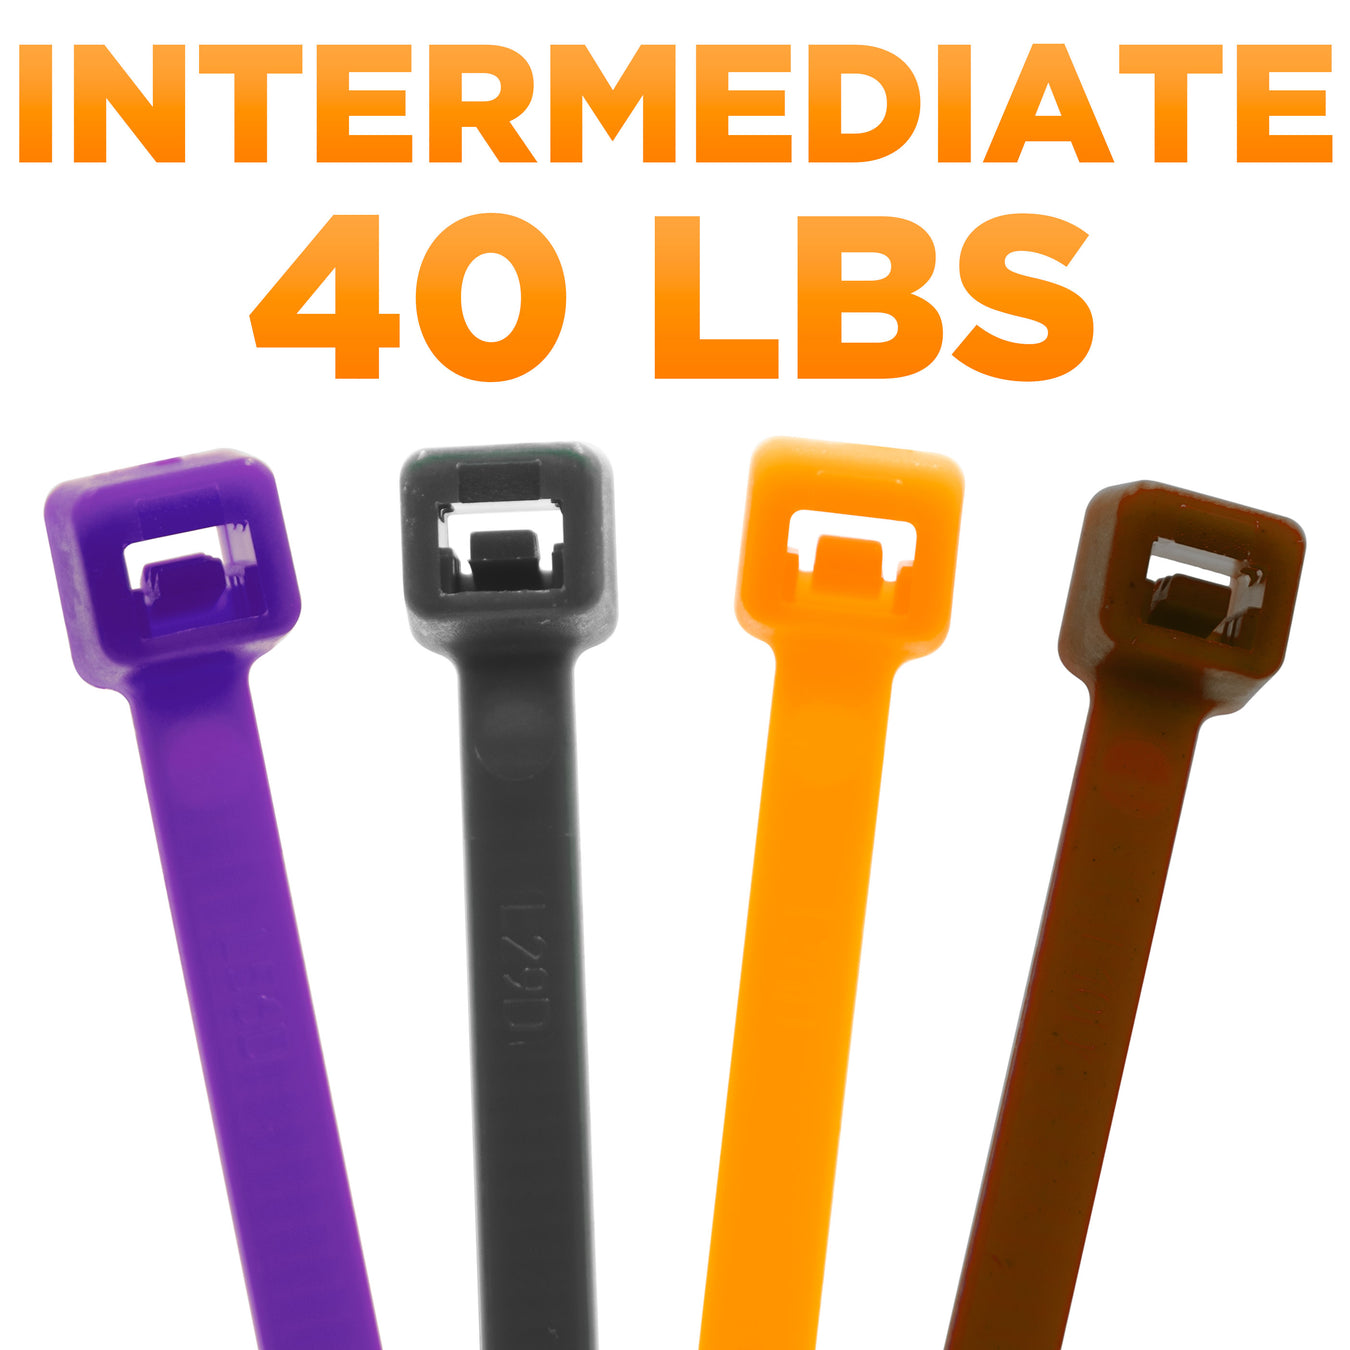 Intermediate Cable Ties (40 lbs)